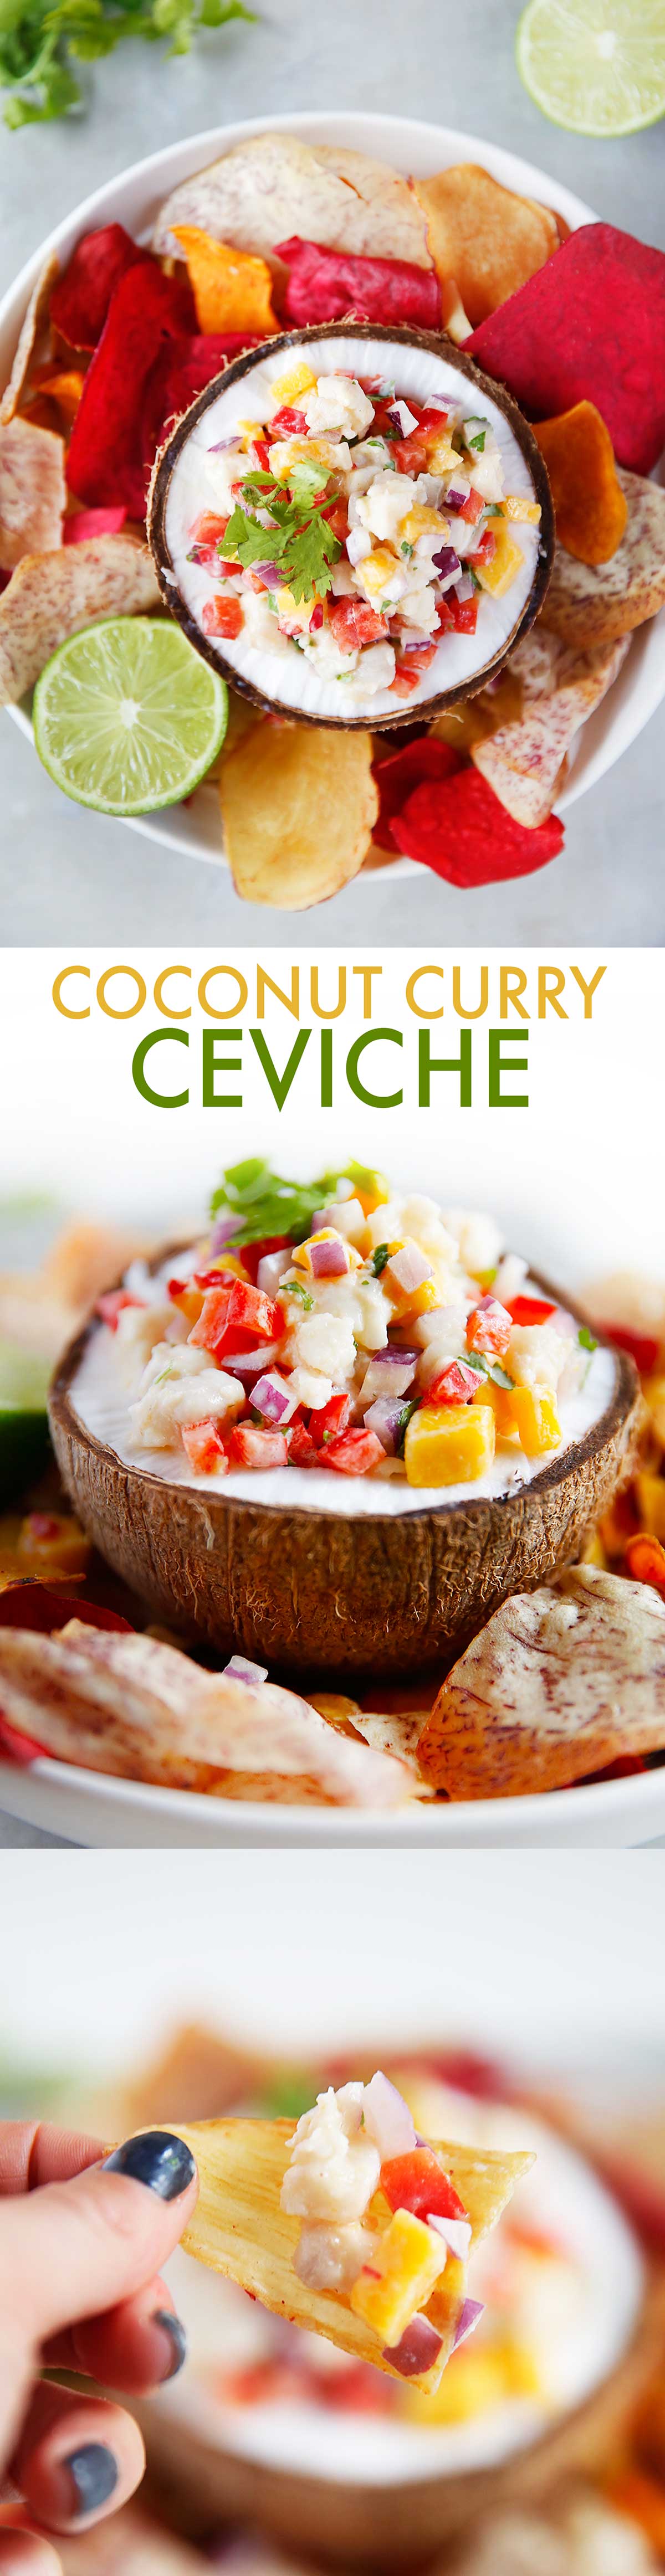 Coconut Curry Ceviche {Dairy-free, grain-free, gluten-free, paleo-friendly} | Lexi's Clean Kitchen